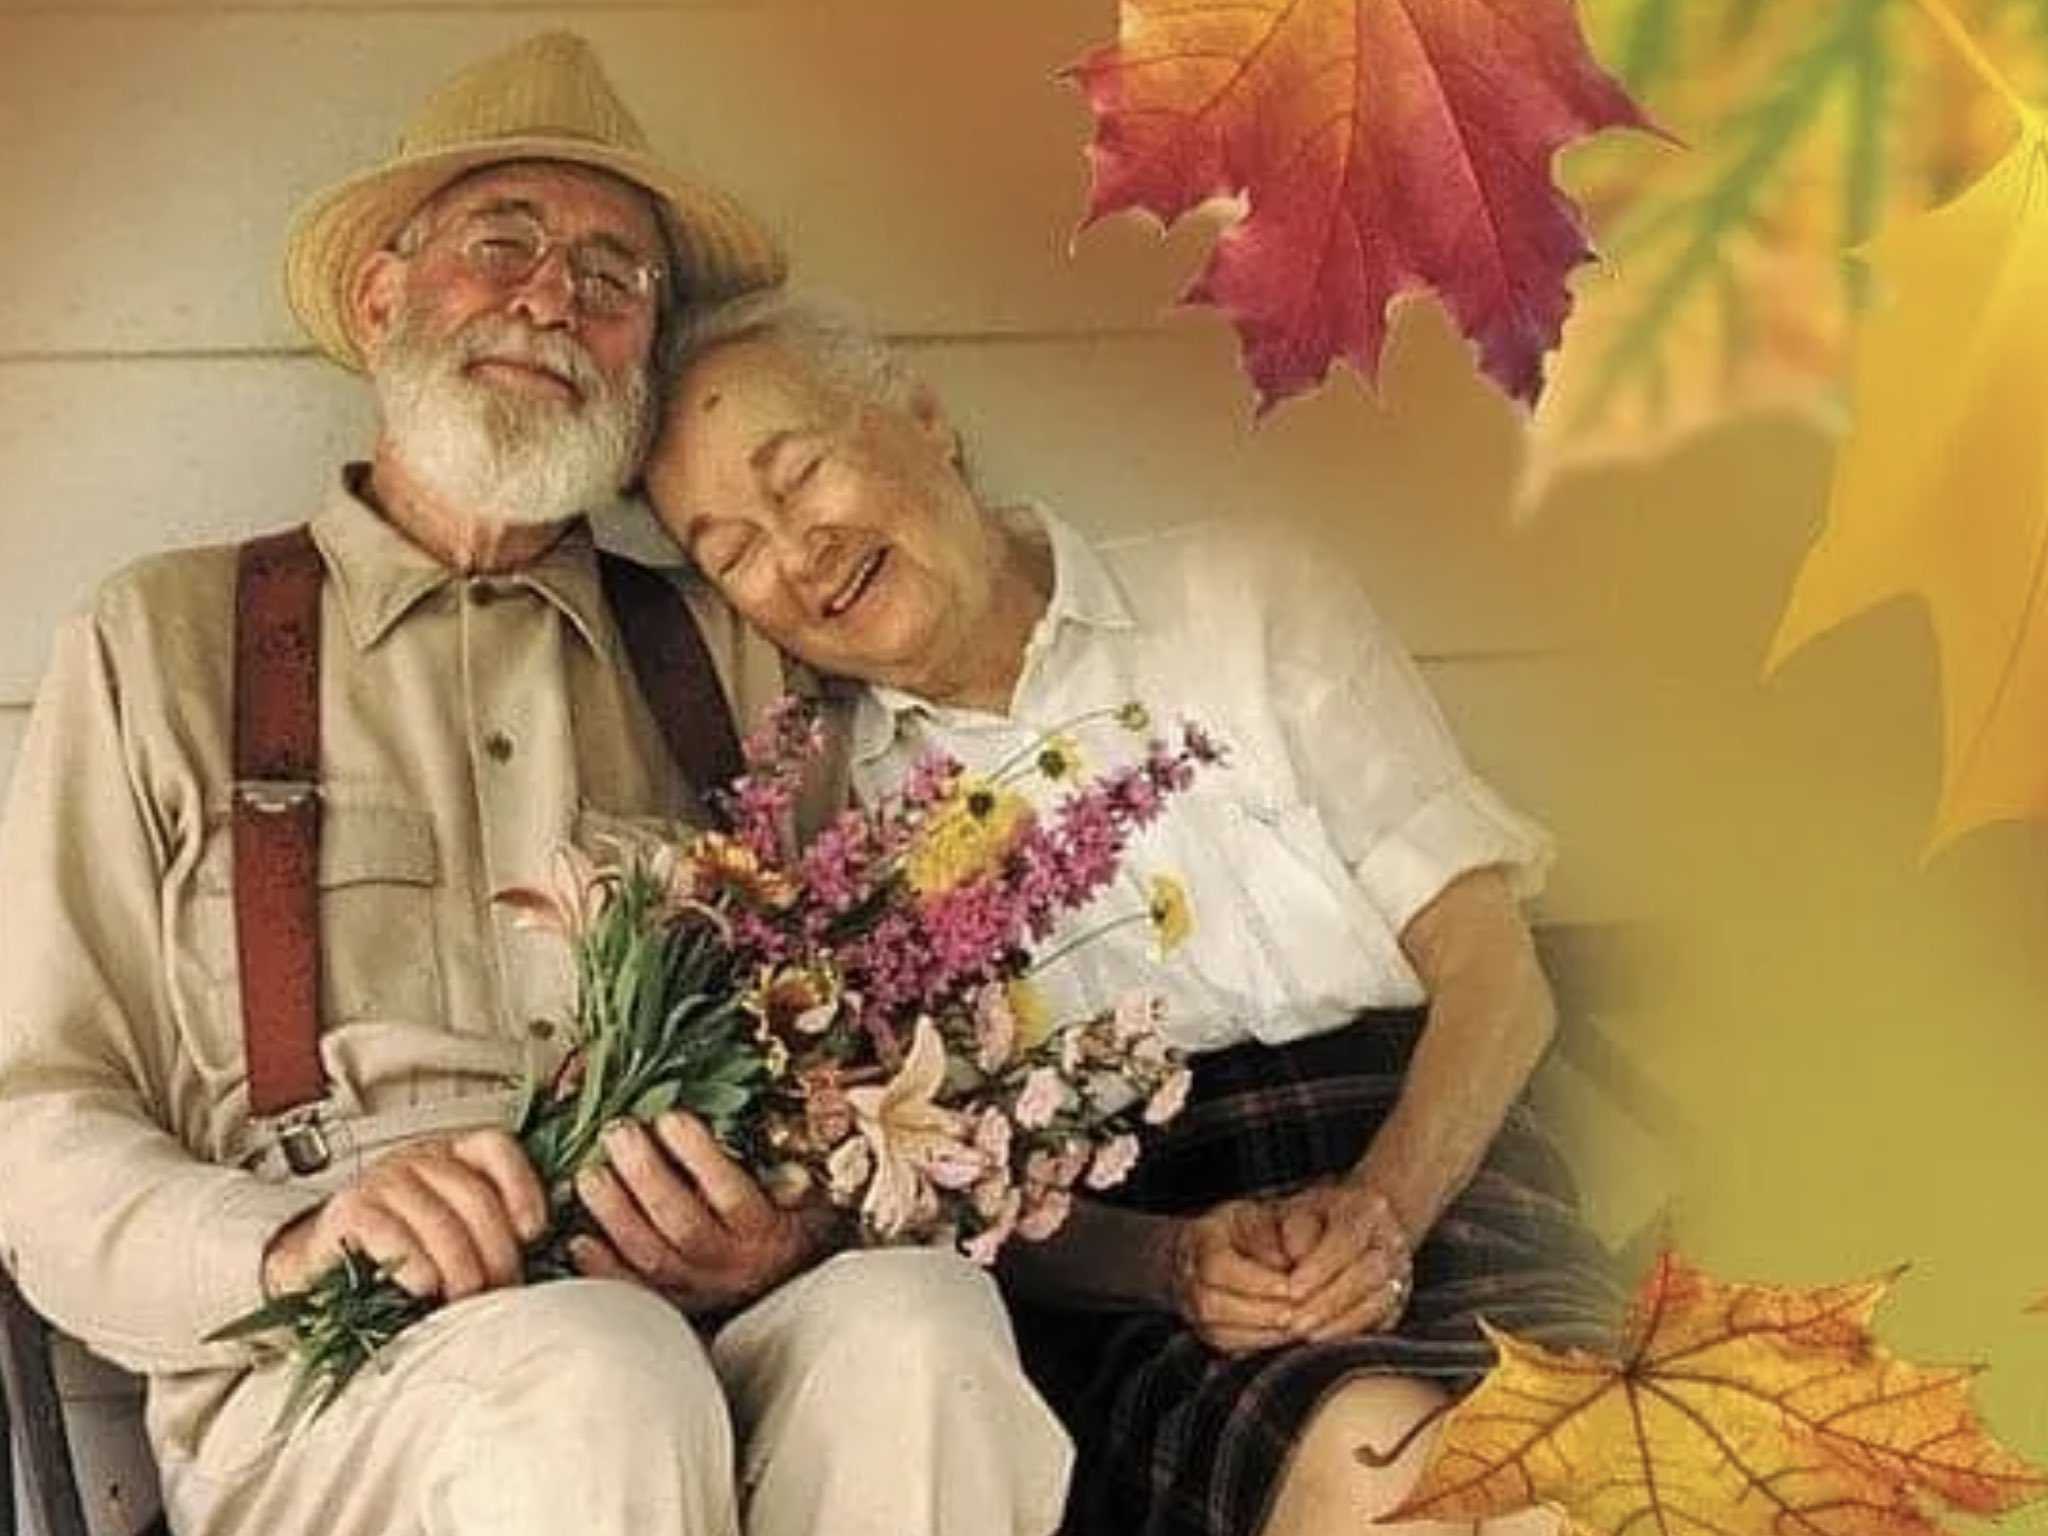 Красивые картинки бабушки и дедушки. Бабушка и дедушка. Фотографии бабушек и дедушек. Счастливые бабушка и дедушка. Пожилые люди с цветами.